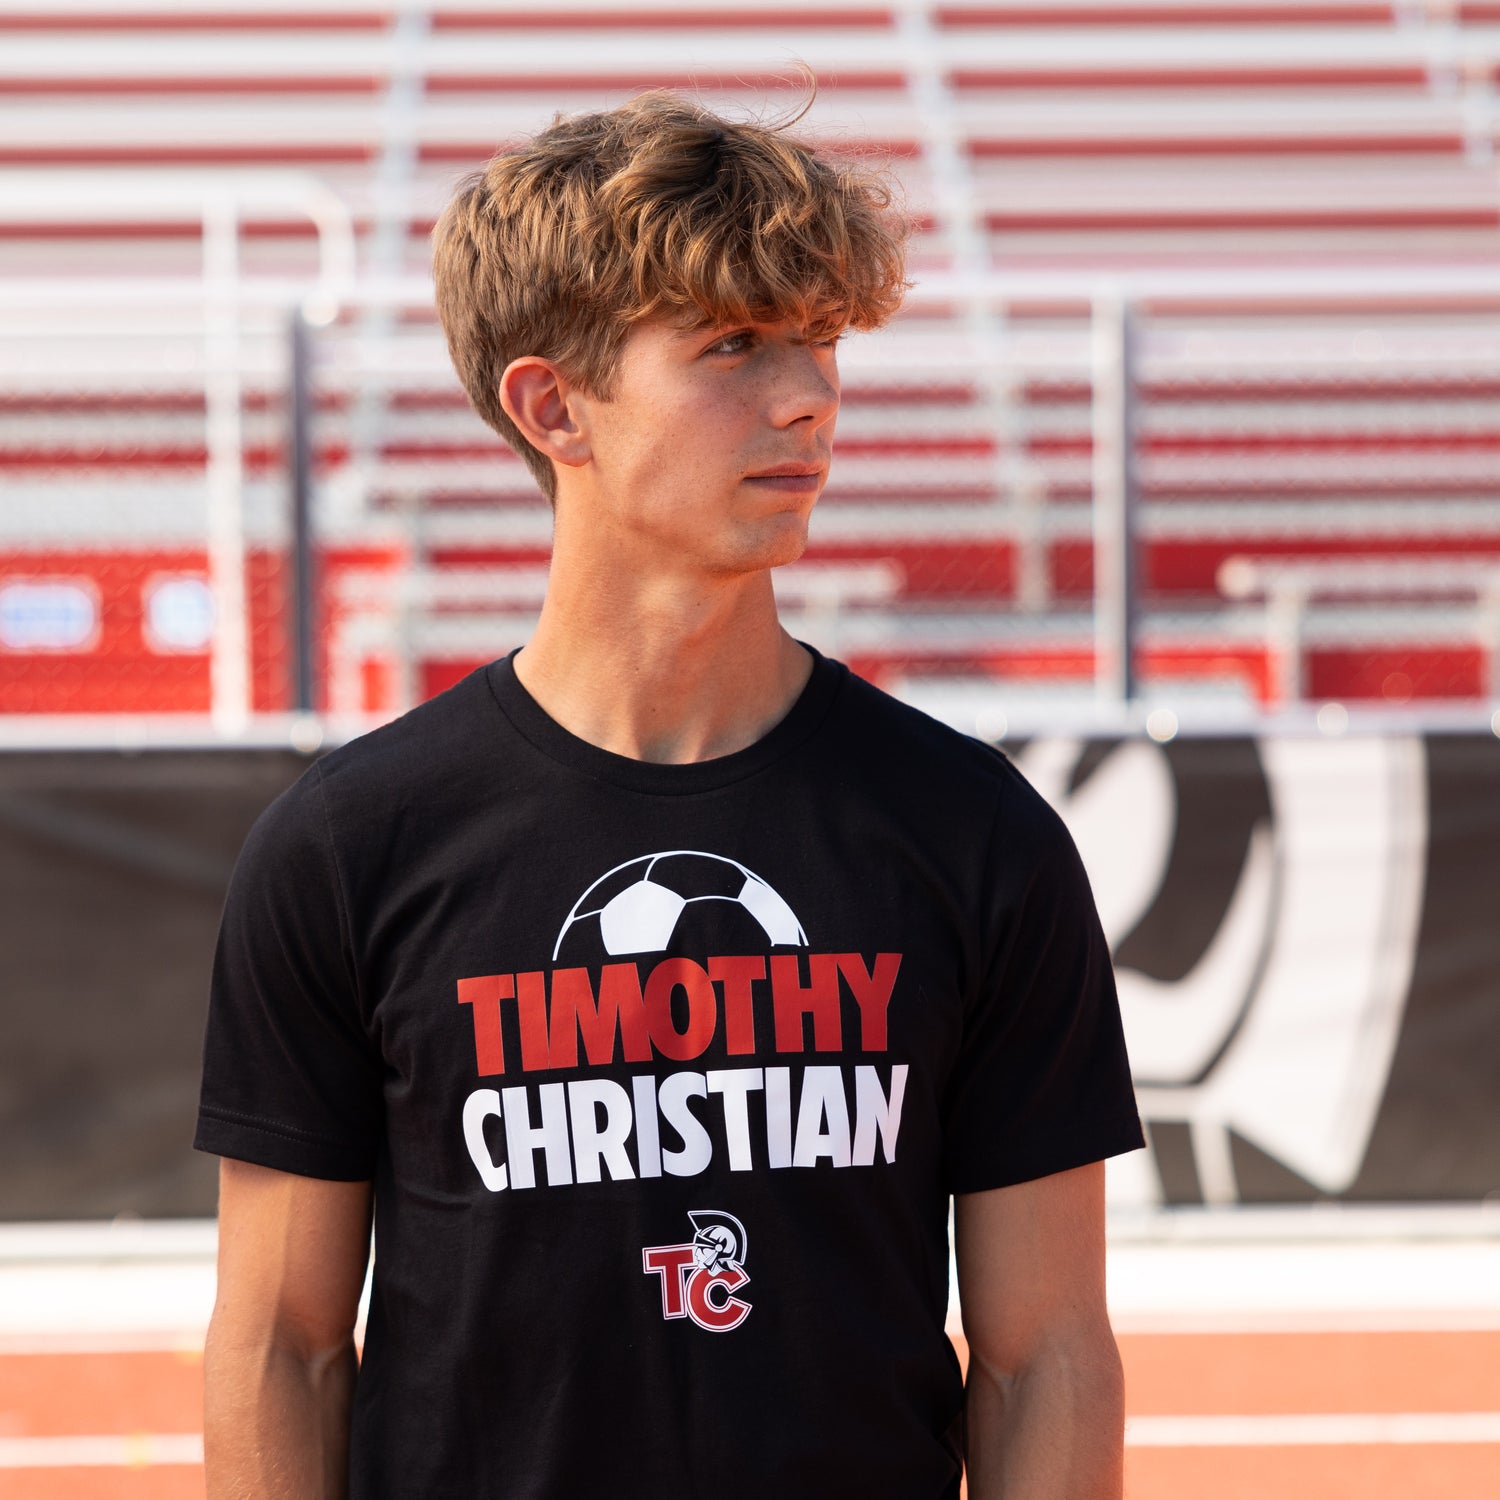 Timothy Christian Soccer T-Shirt